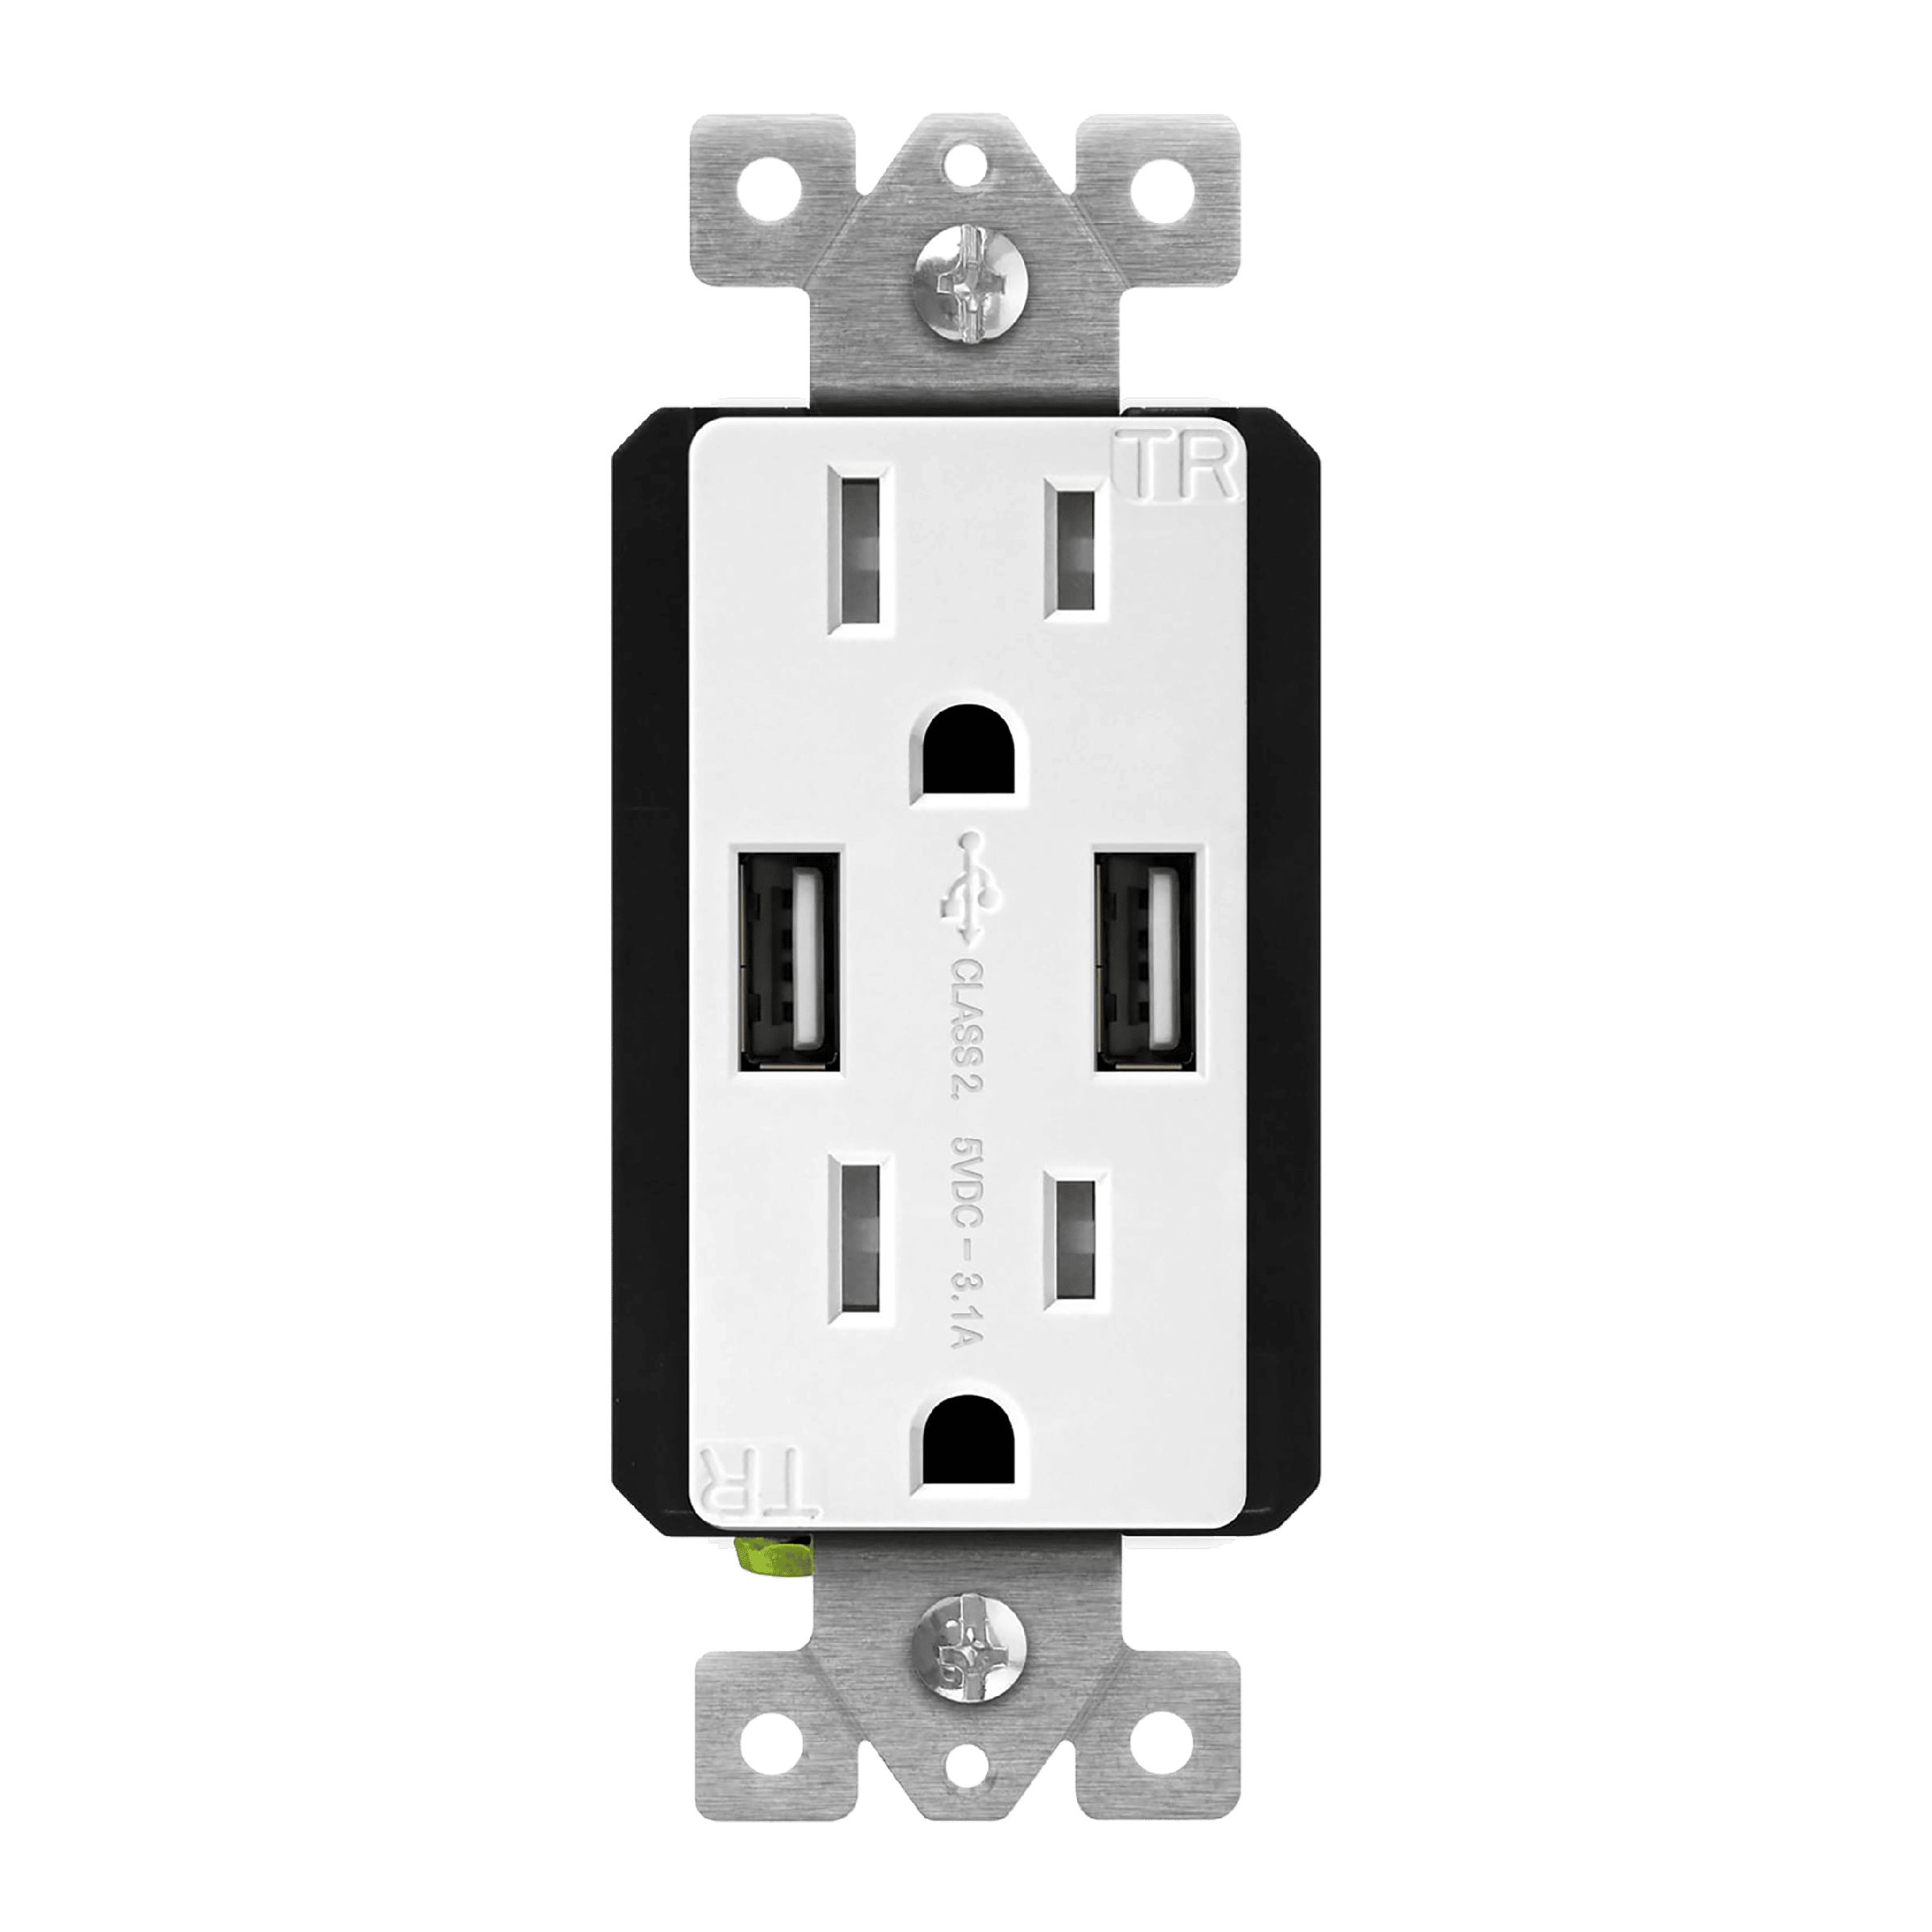 3.1A Dual USB-A Charging Outlet, 15A/125V Tamper-Resistant